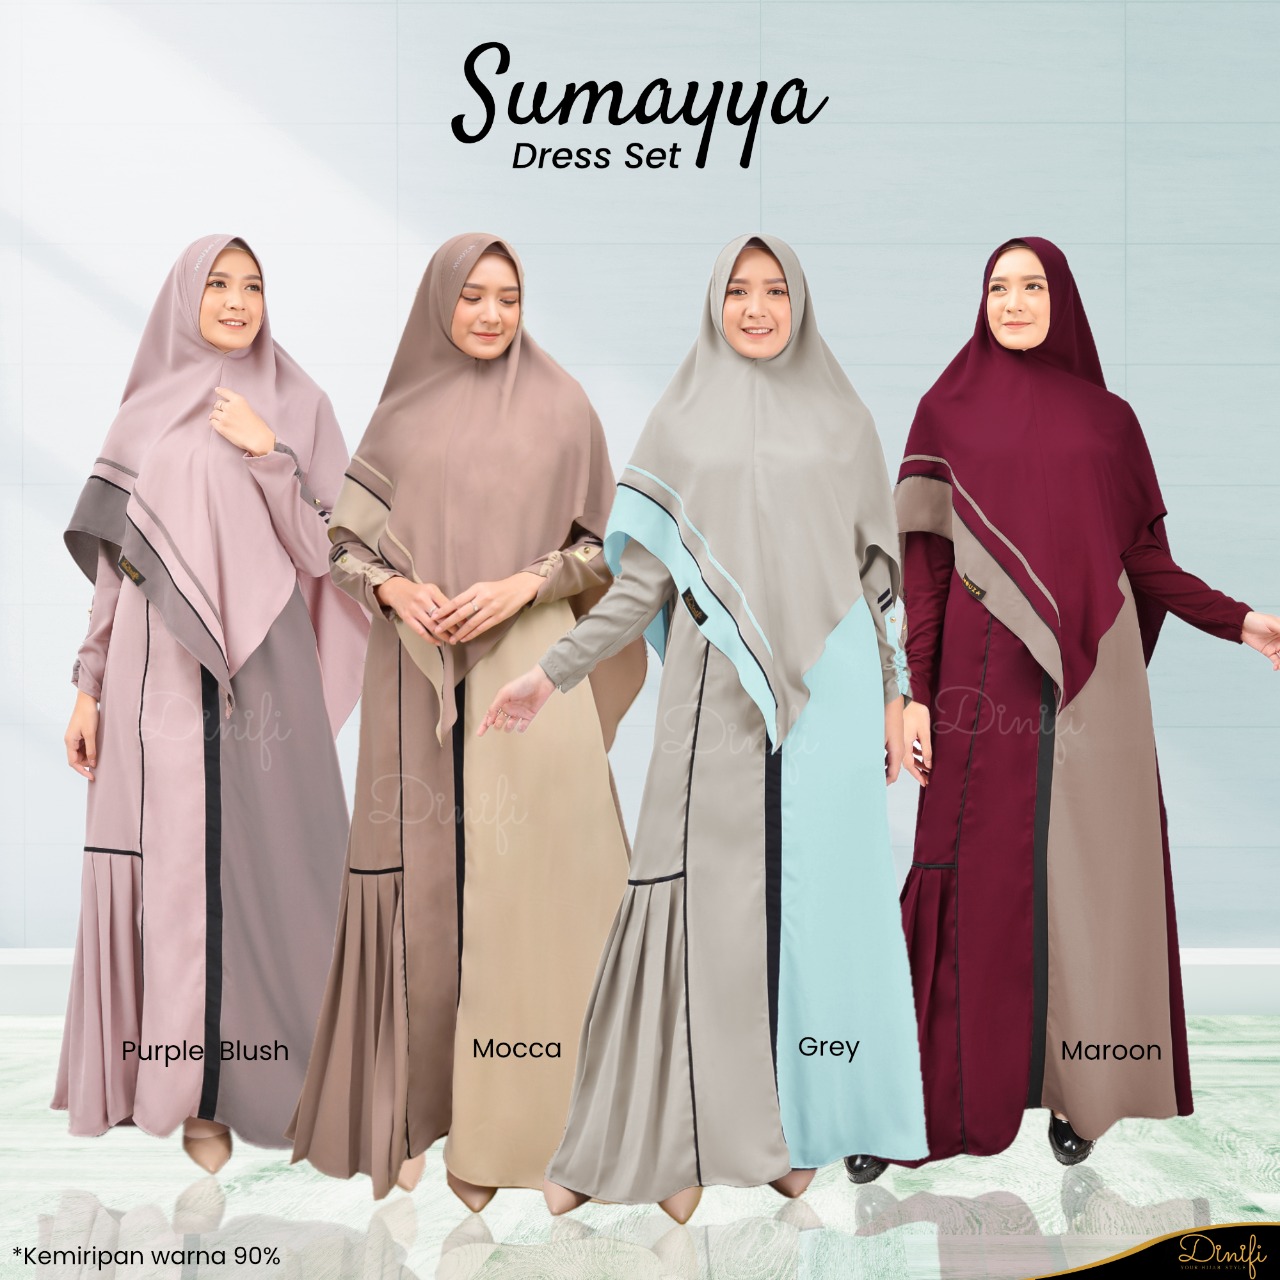 Sumayya Dress Set